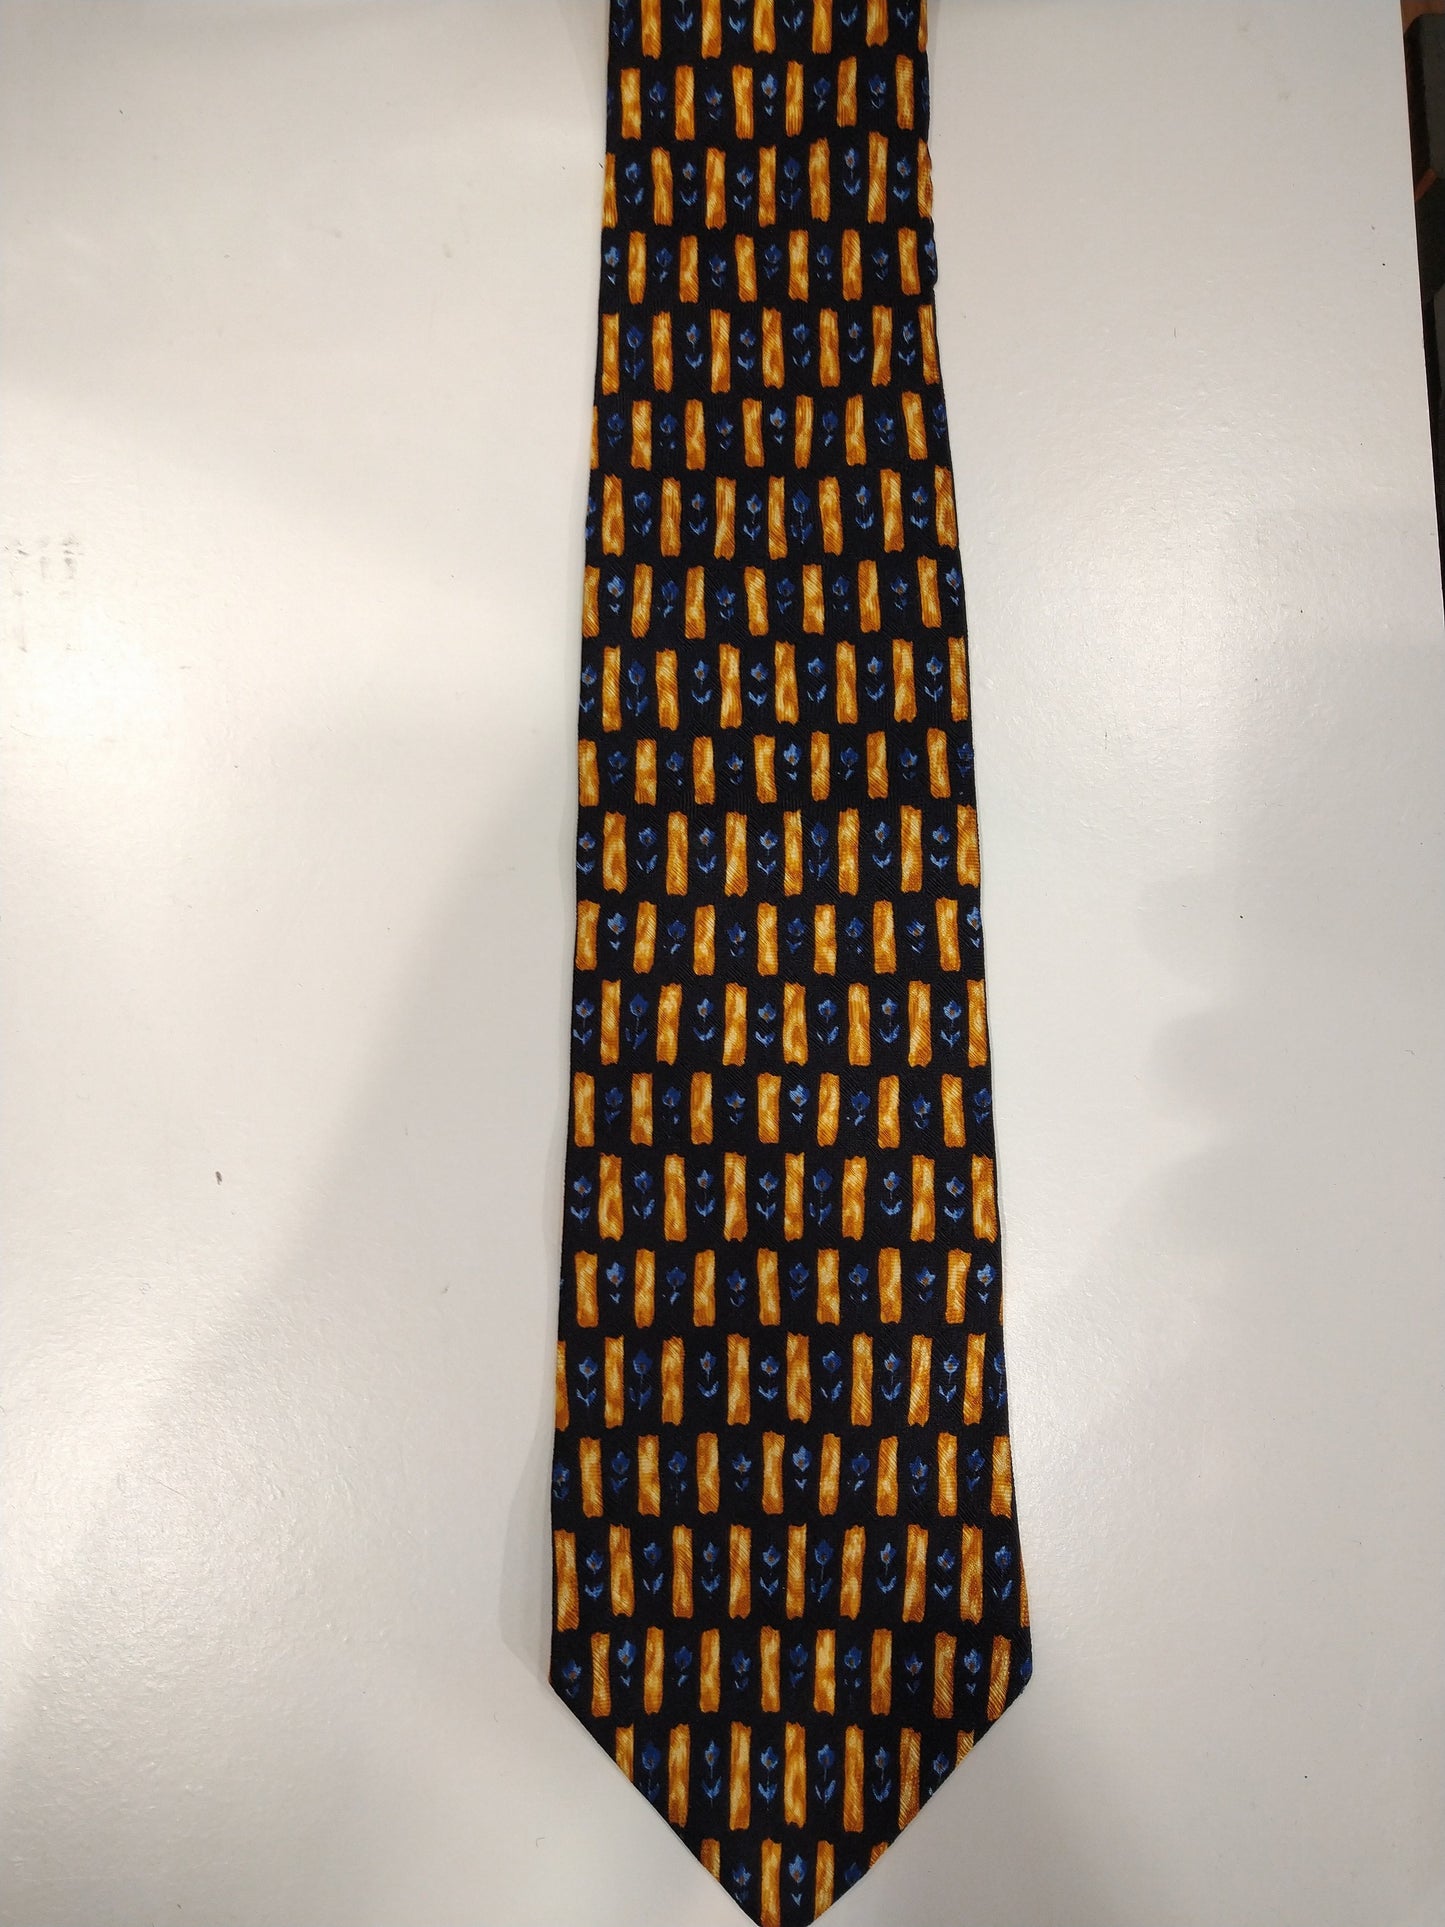 Cravatta vintage boss hugo boss. Motivo blu / nero / giallo.